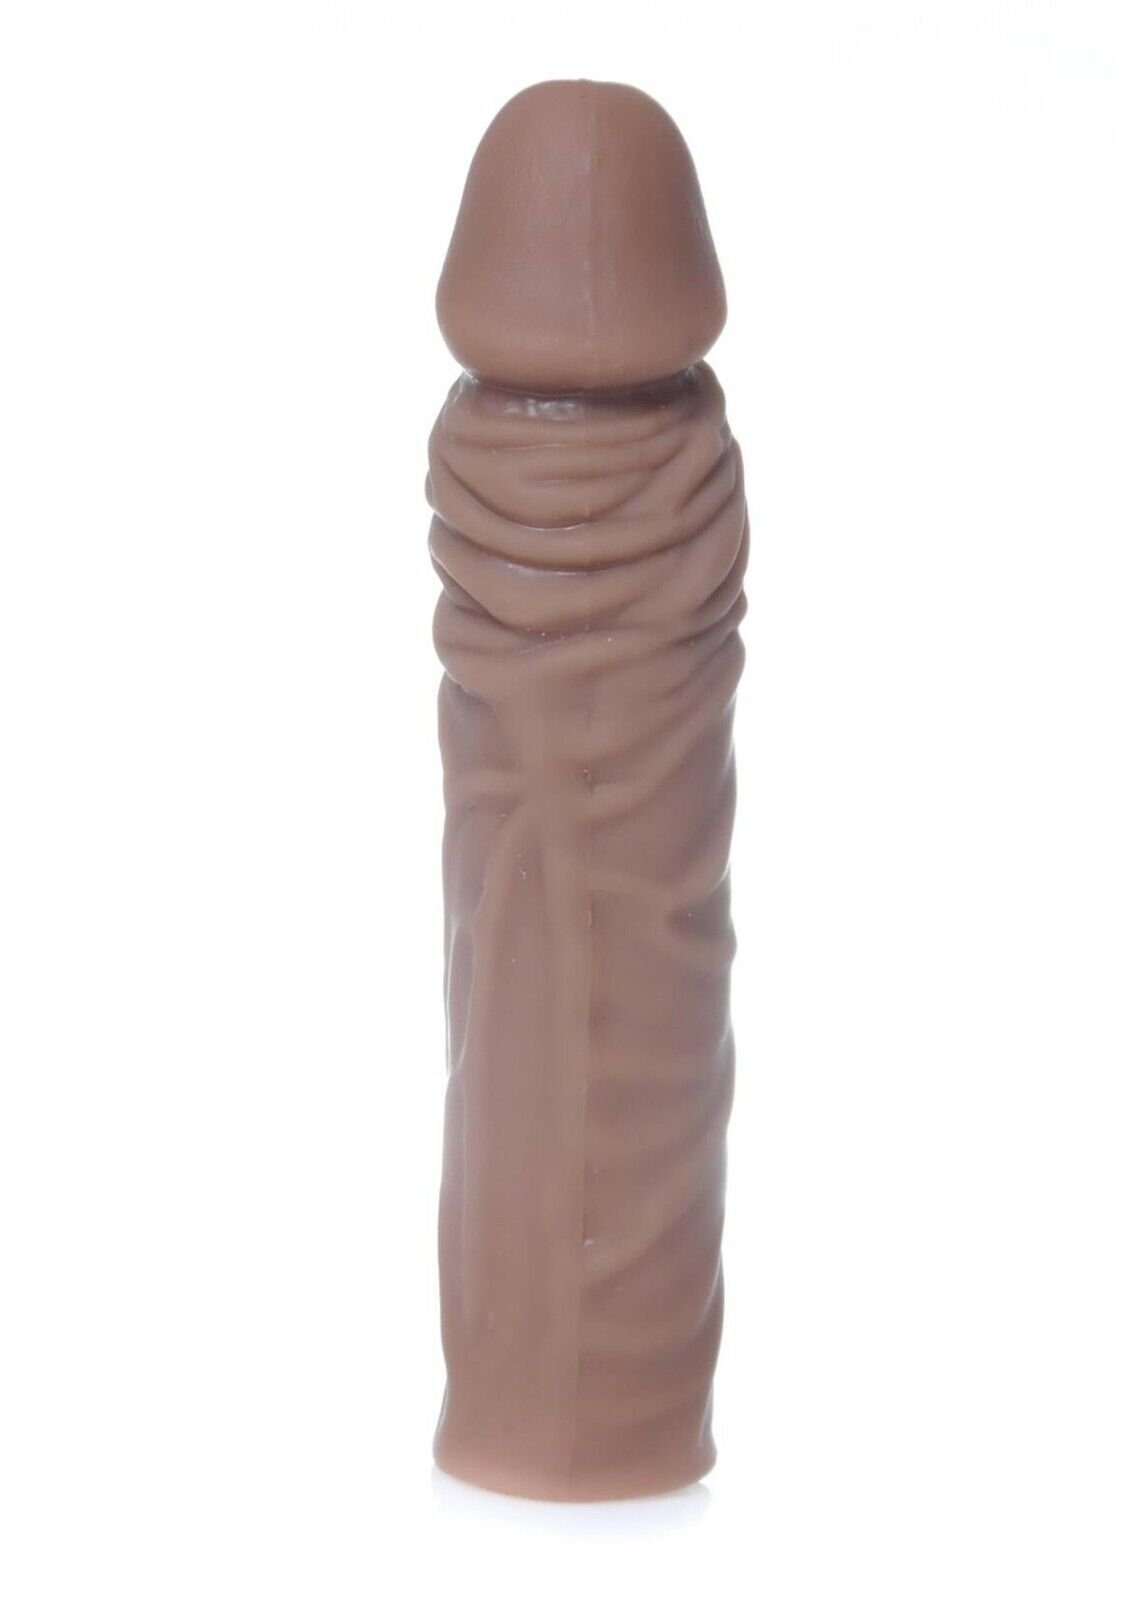 denu-shop Penishülle TPE Cock Sexspielzeug Extender Vergrößerung Penishülle Sleeve Kondom